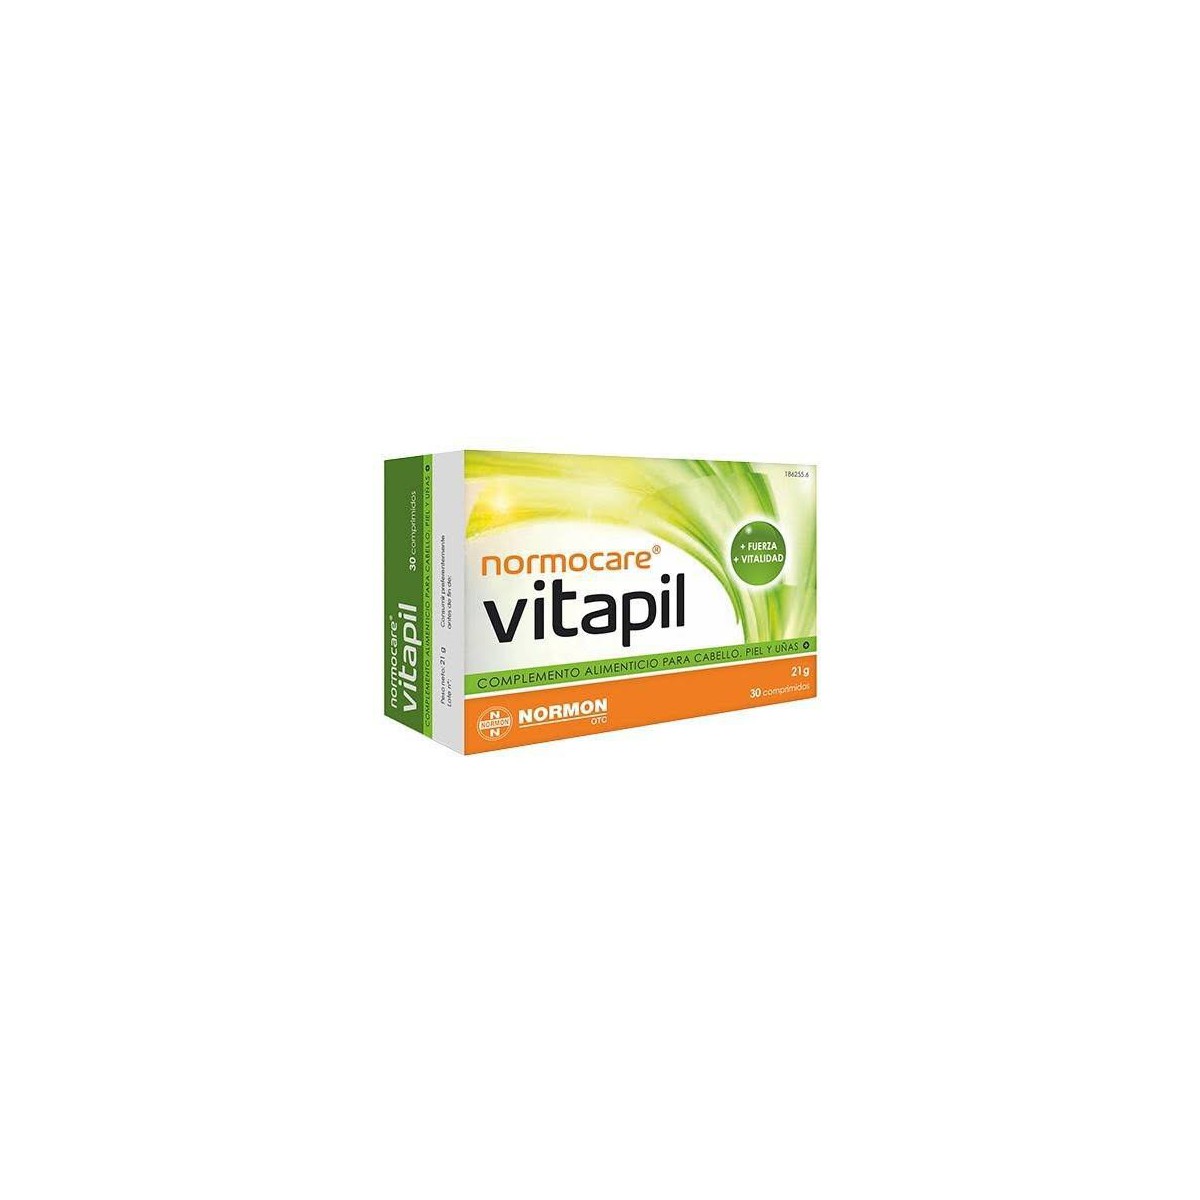 Normocare Vitapil 30 comprimidos